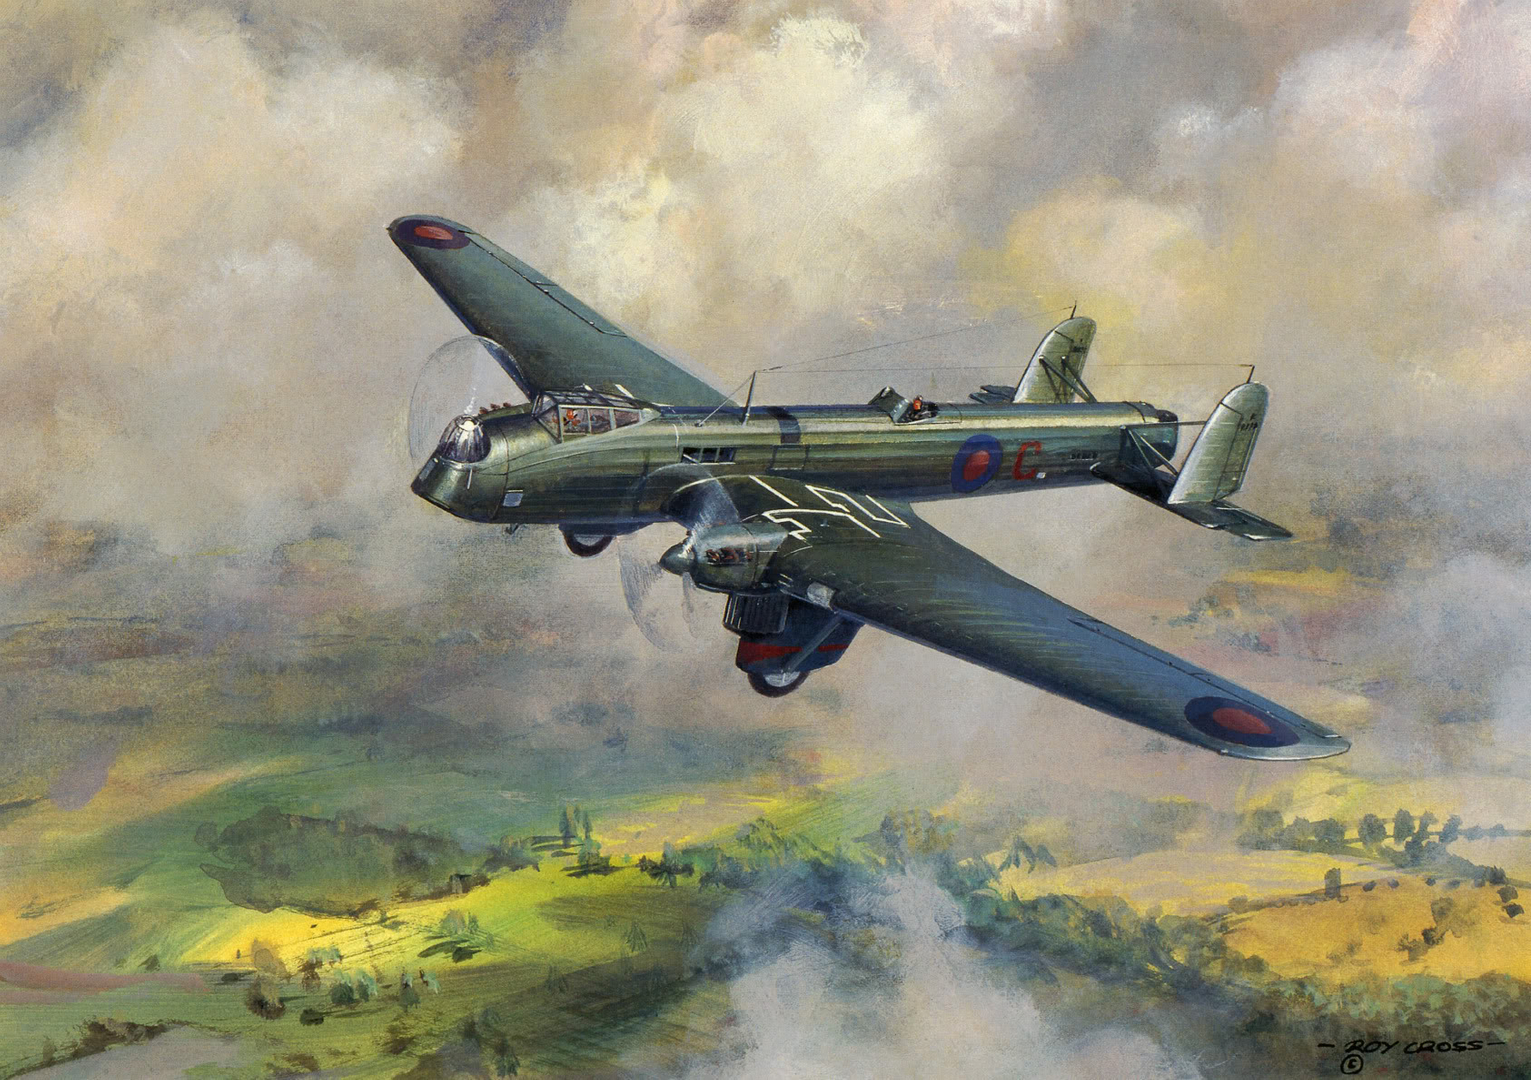 Bomber Command – Origins and Doctrine